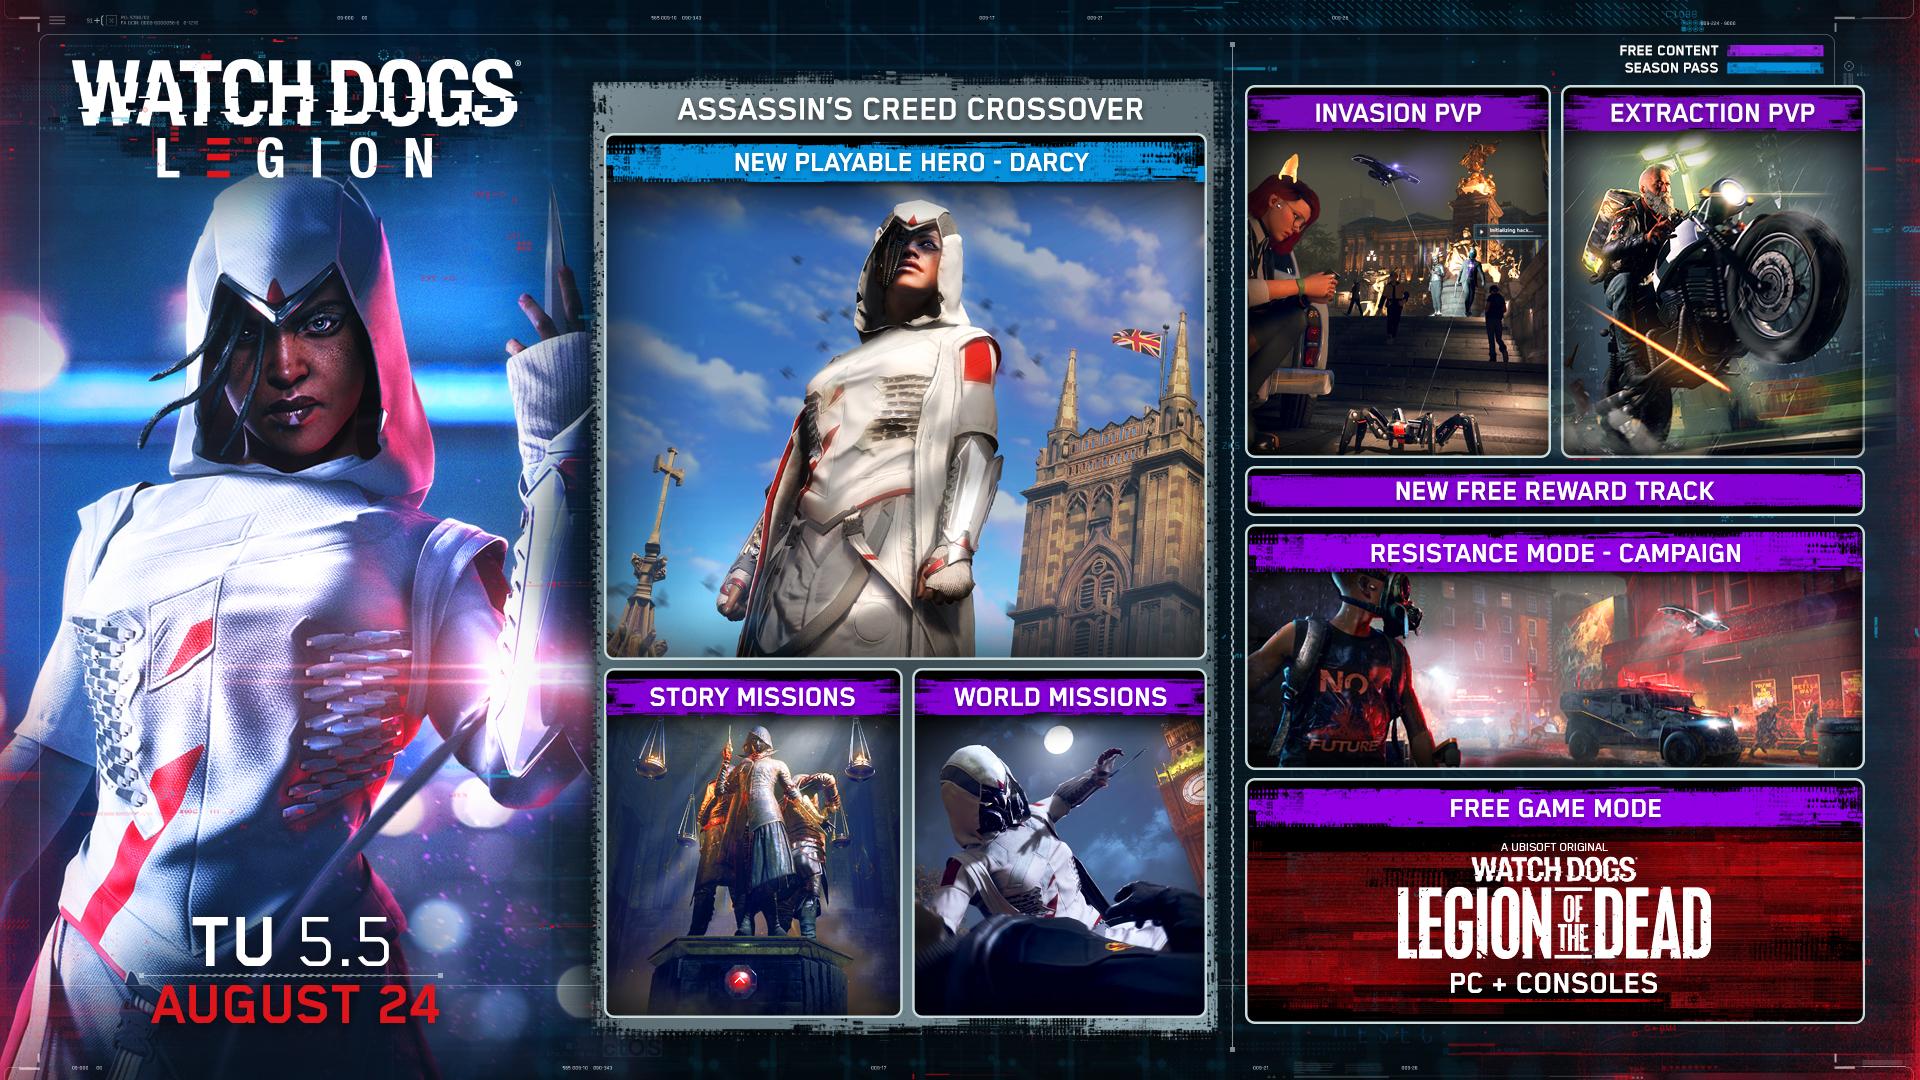 New Watch Dogs Legion Screenshots Leak Ahead of Ubisoft's